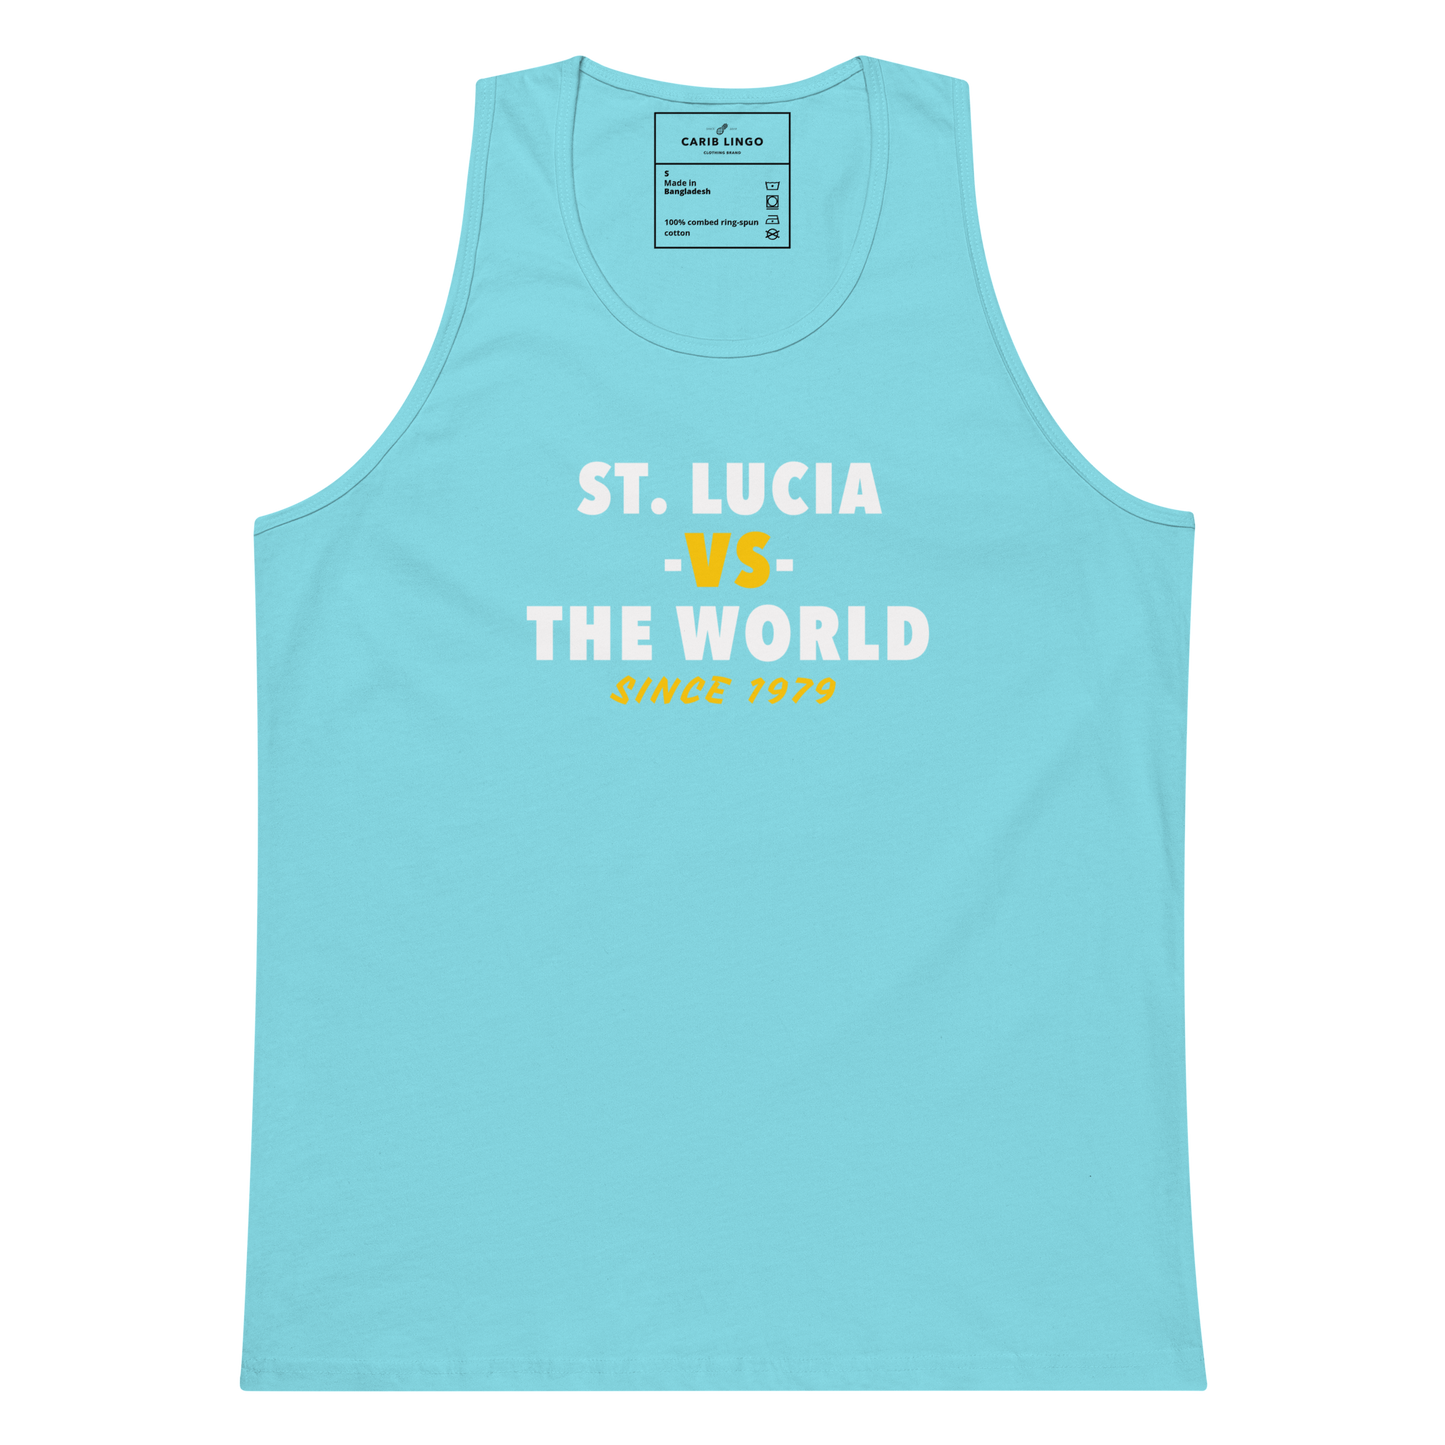 St. Lucia -vs- The World Men’s premium tank top